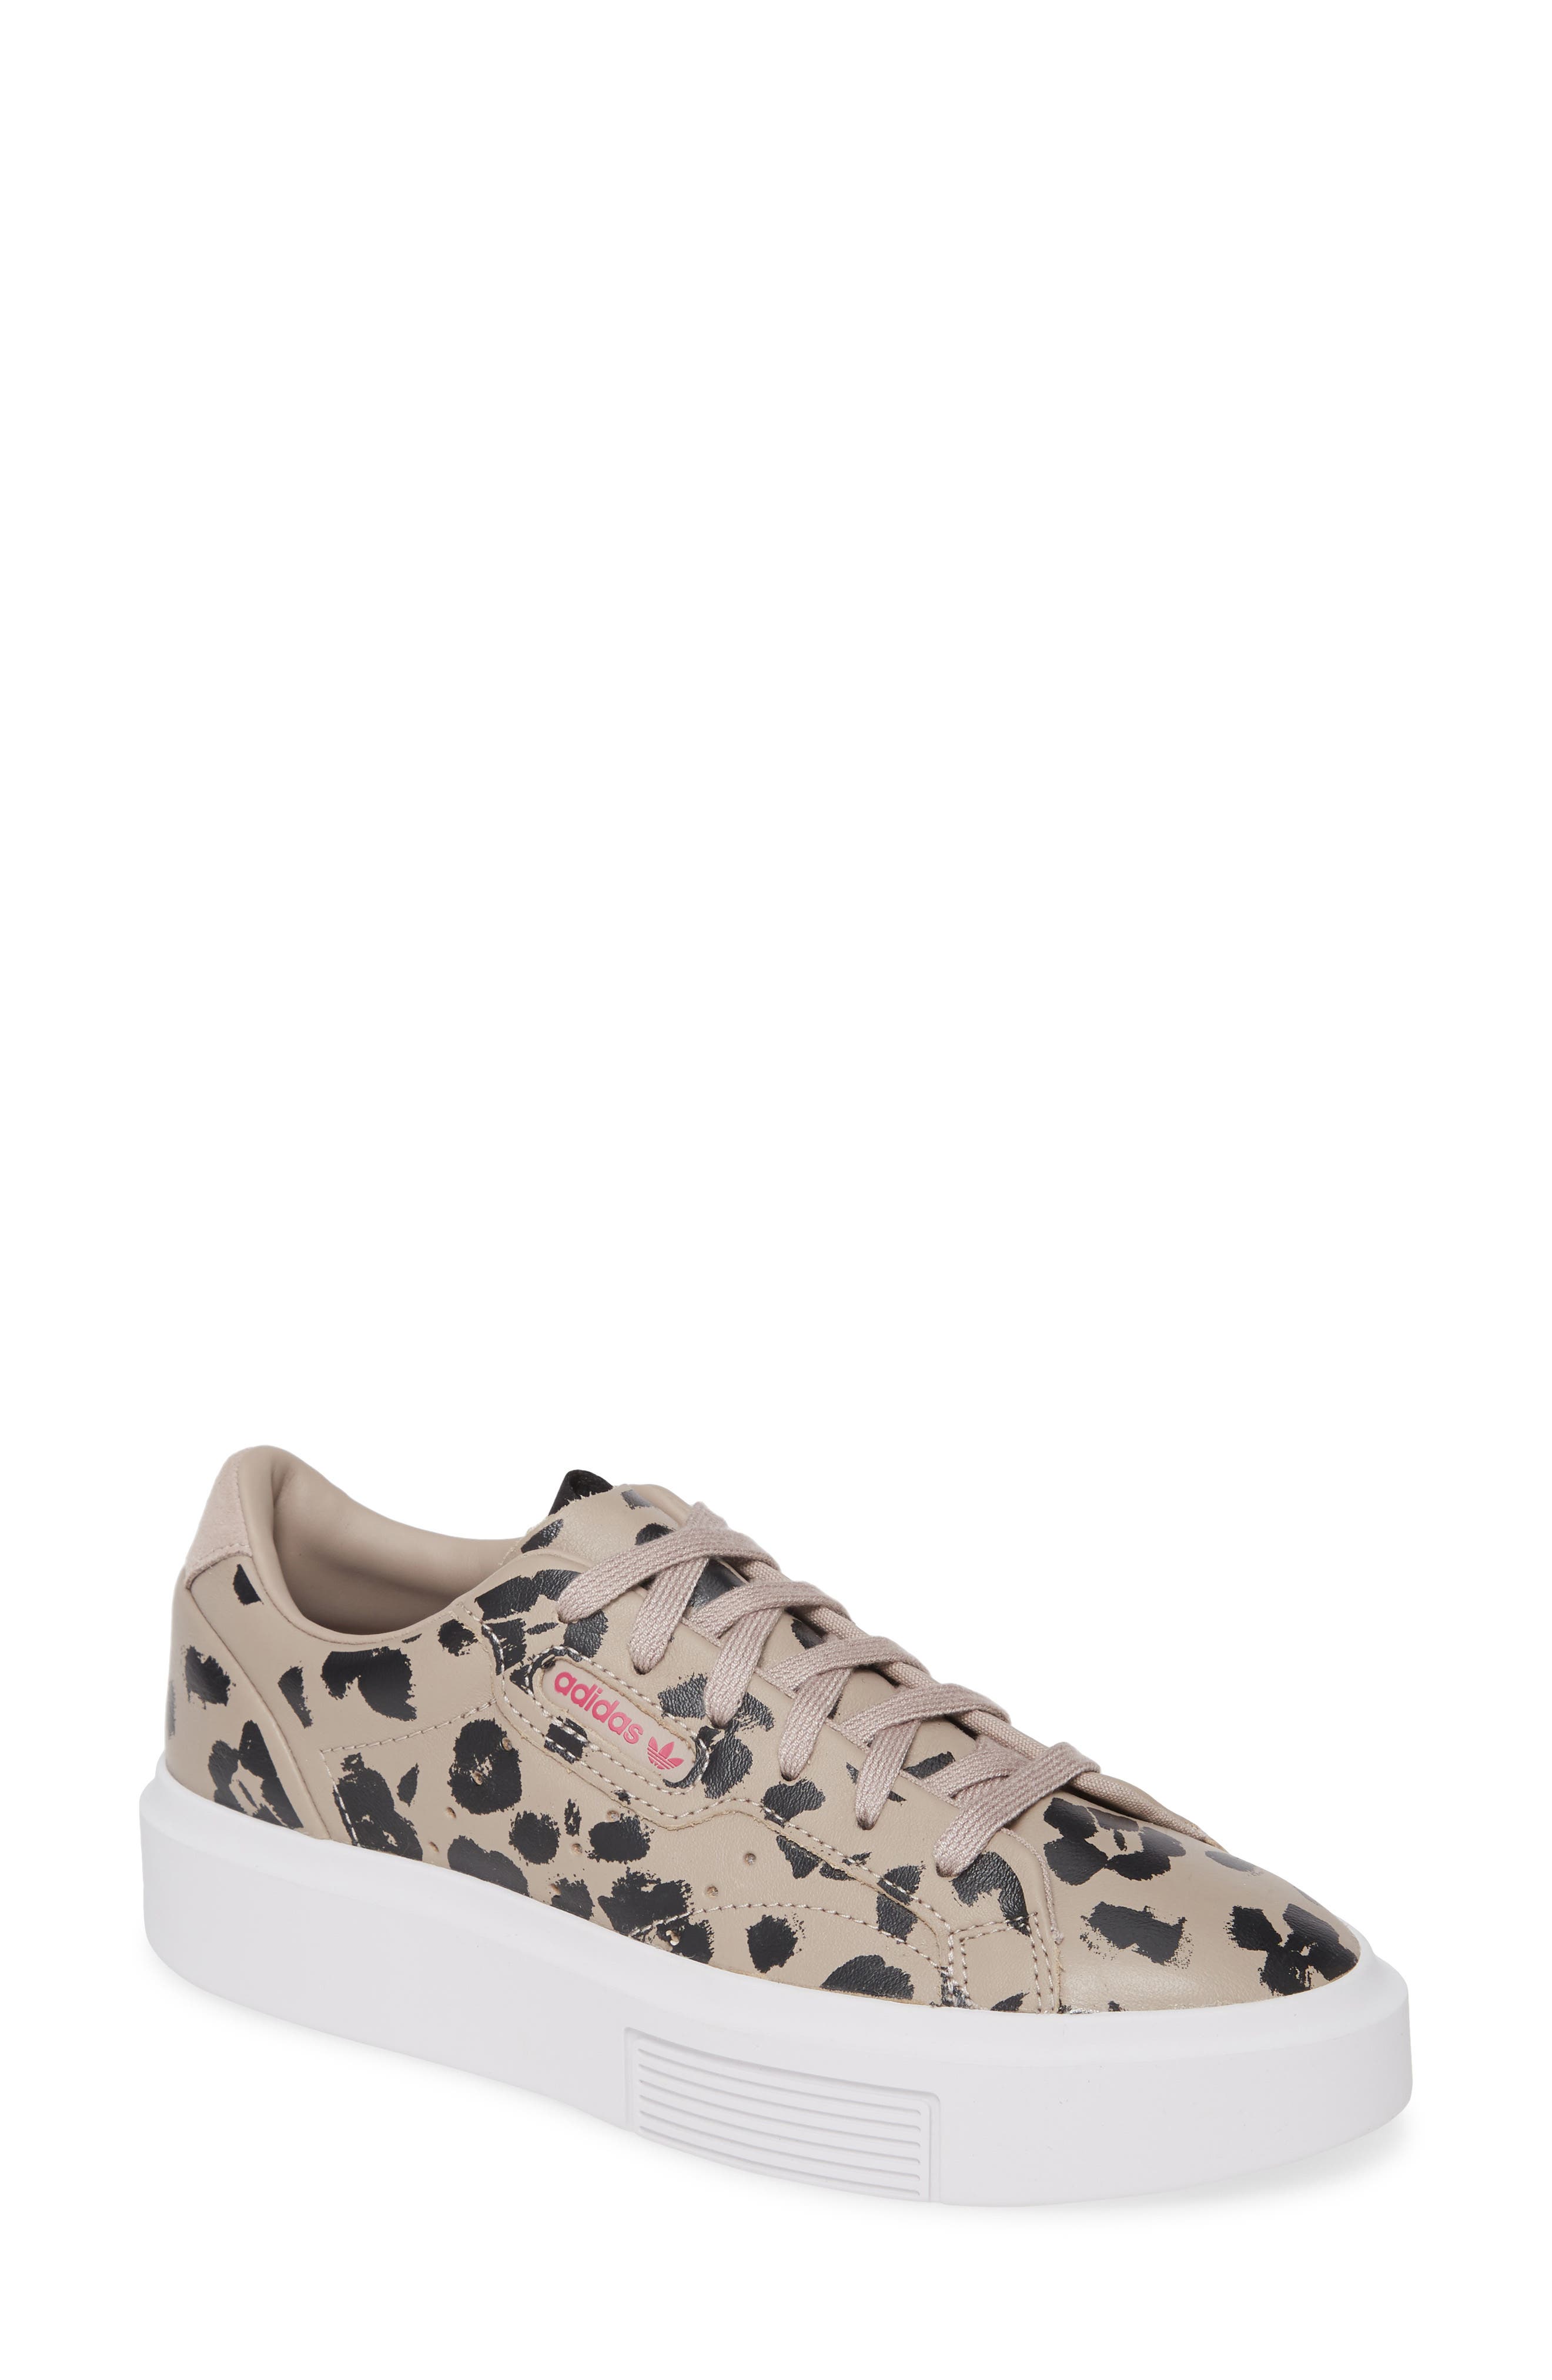 adidas sleek super shoes leopard